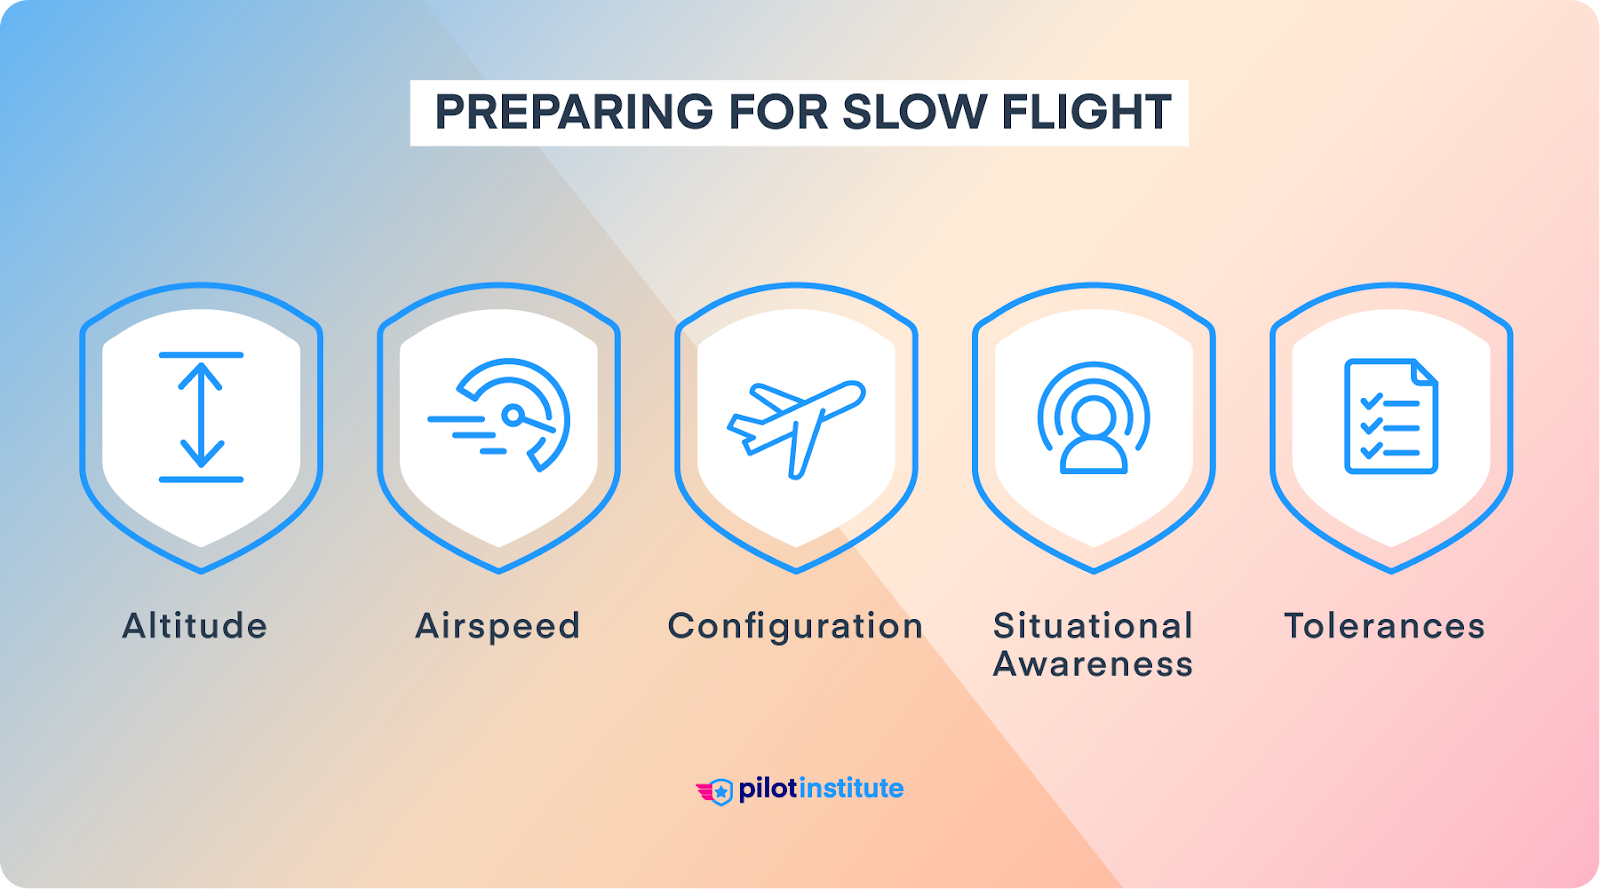 Preparing for slow flight infographic.